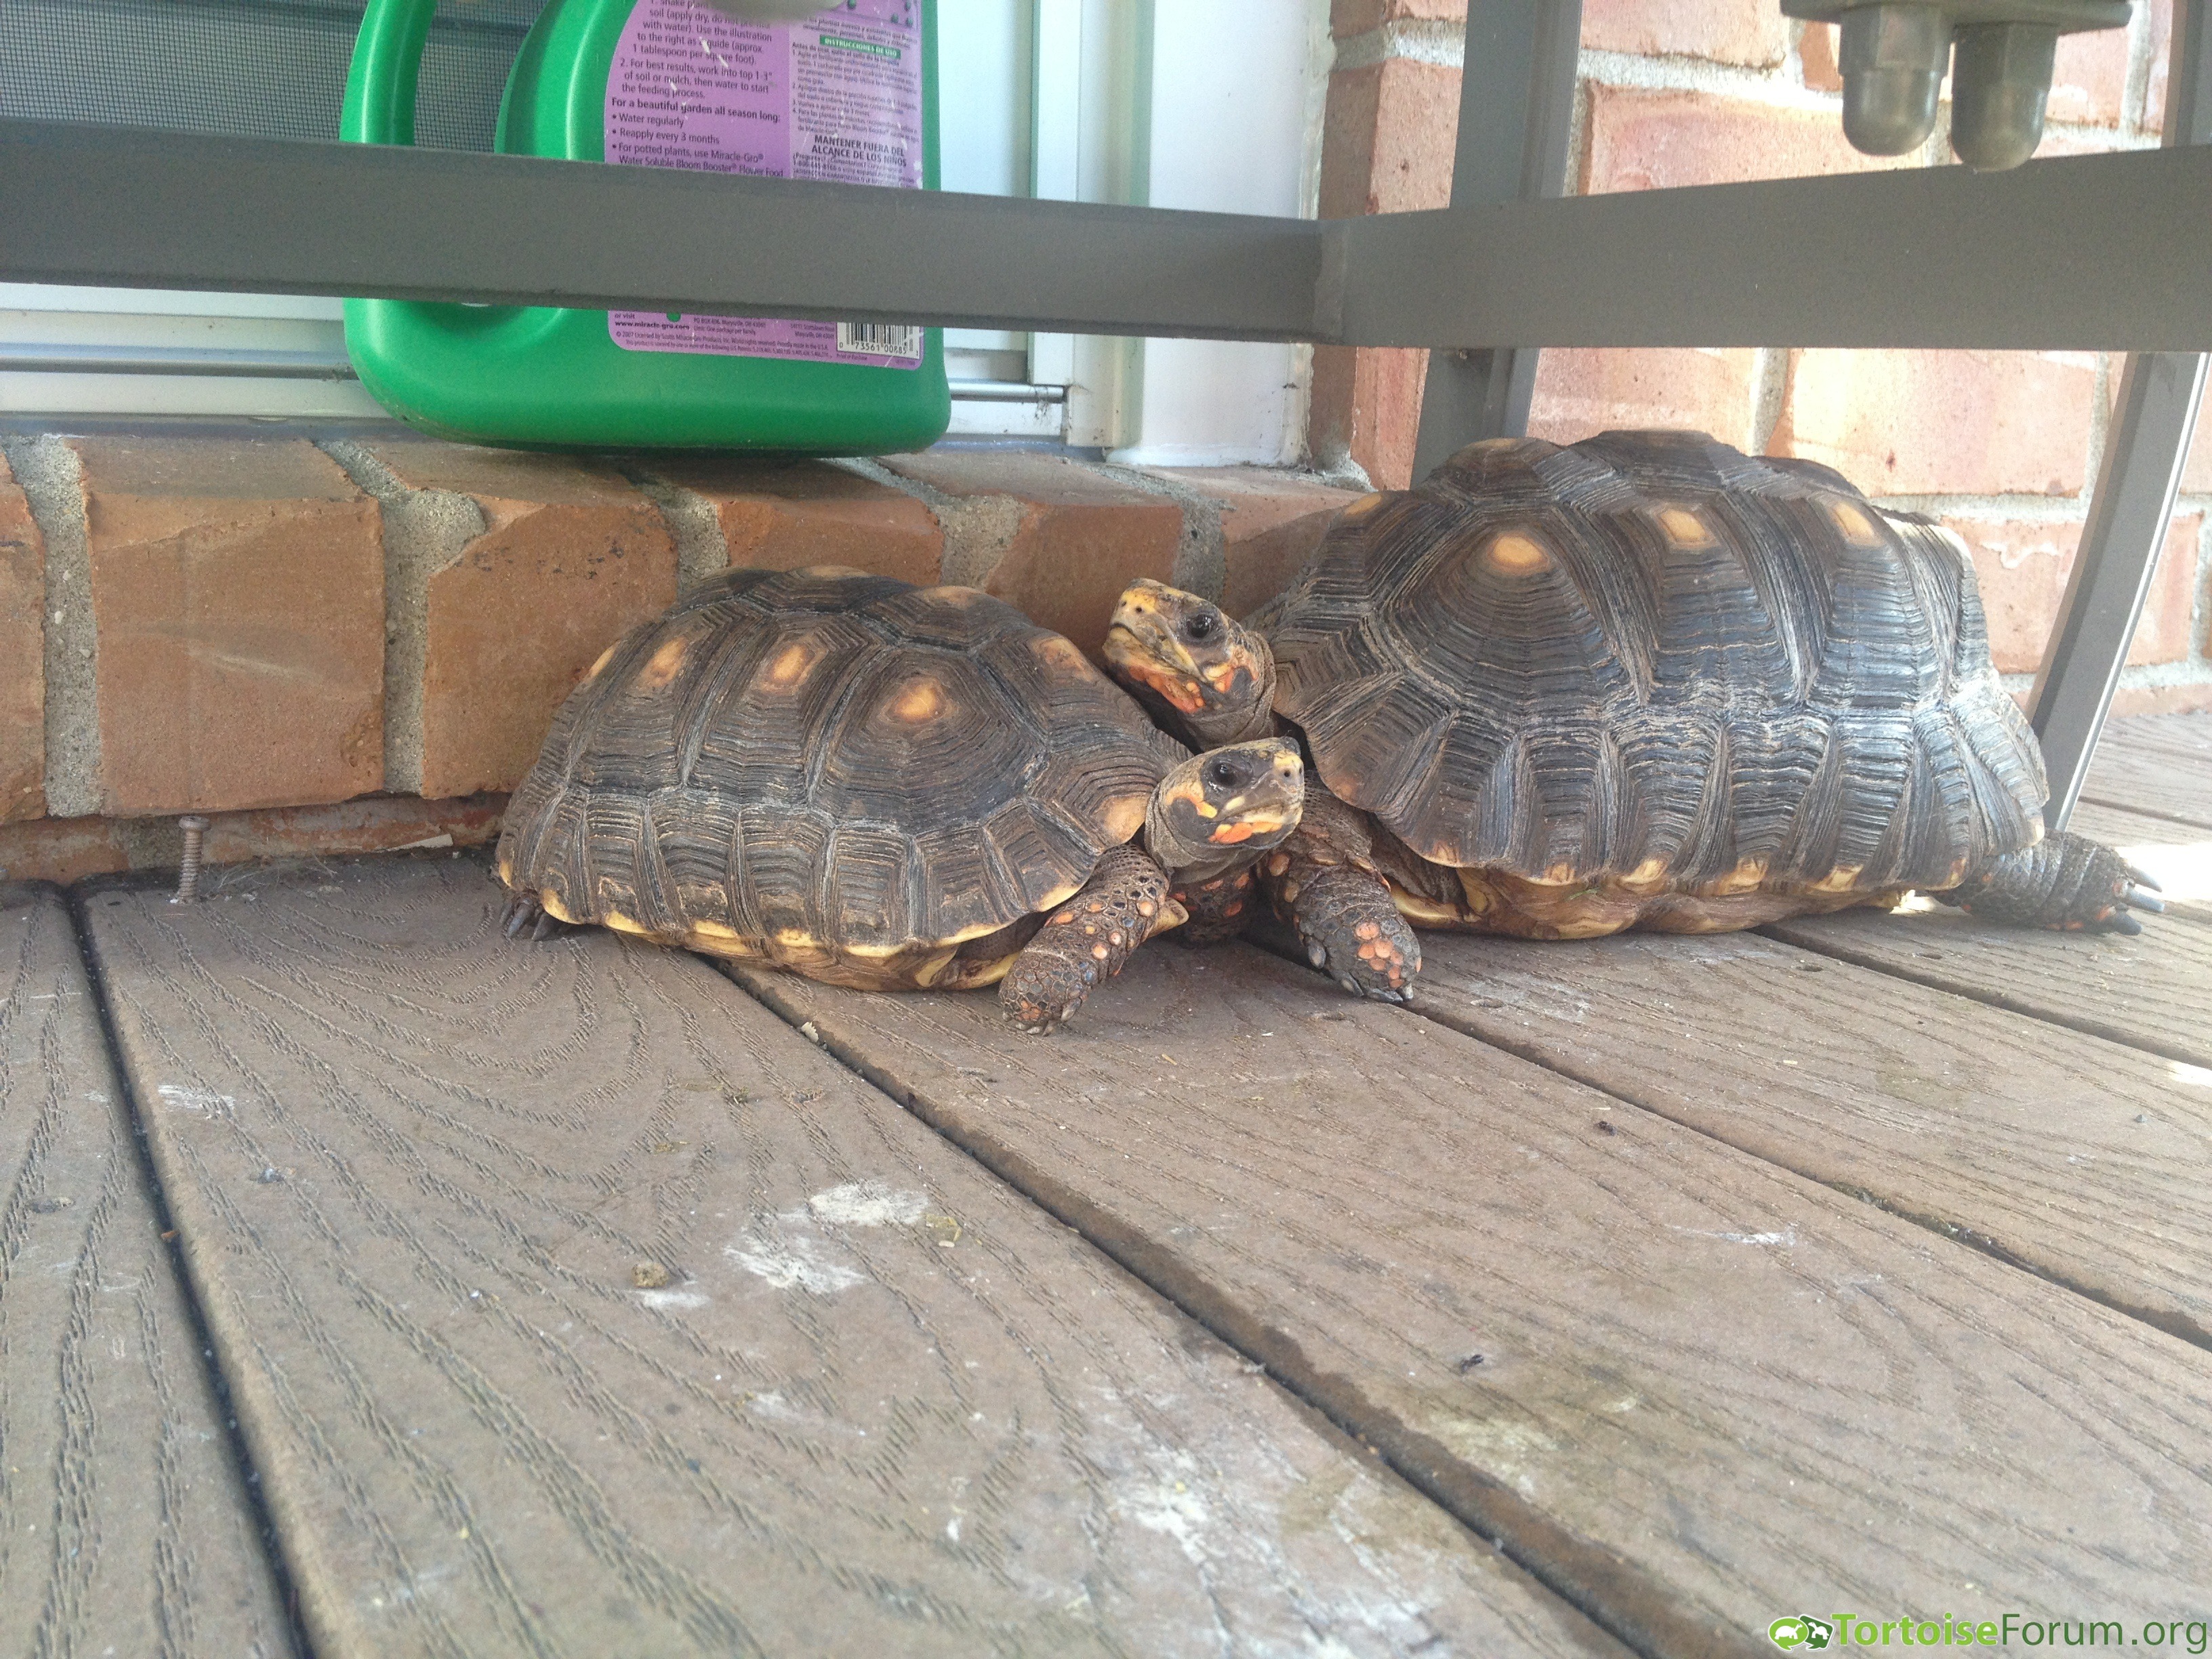 Snuggling Tortoises